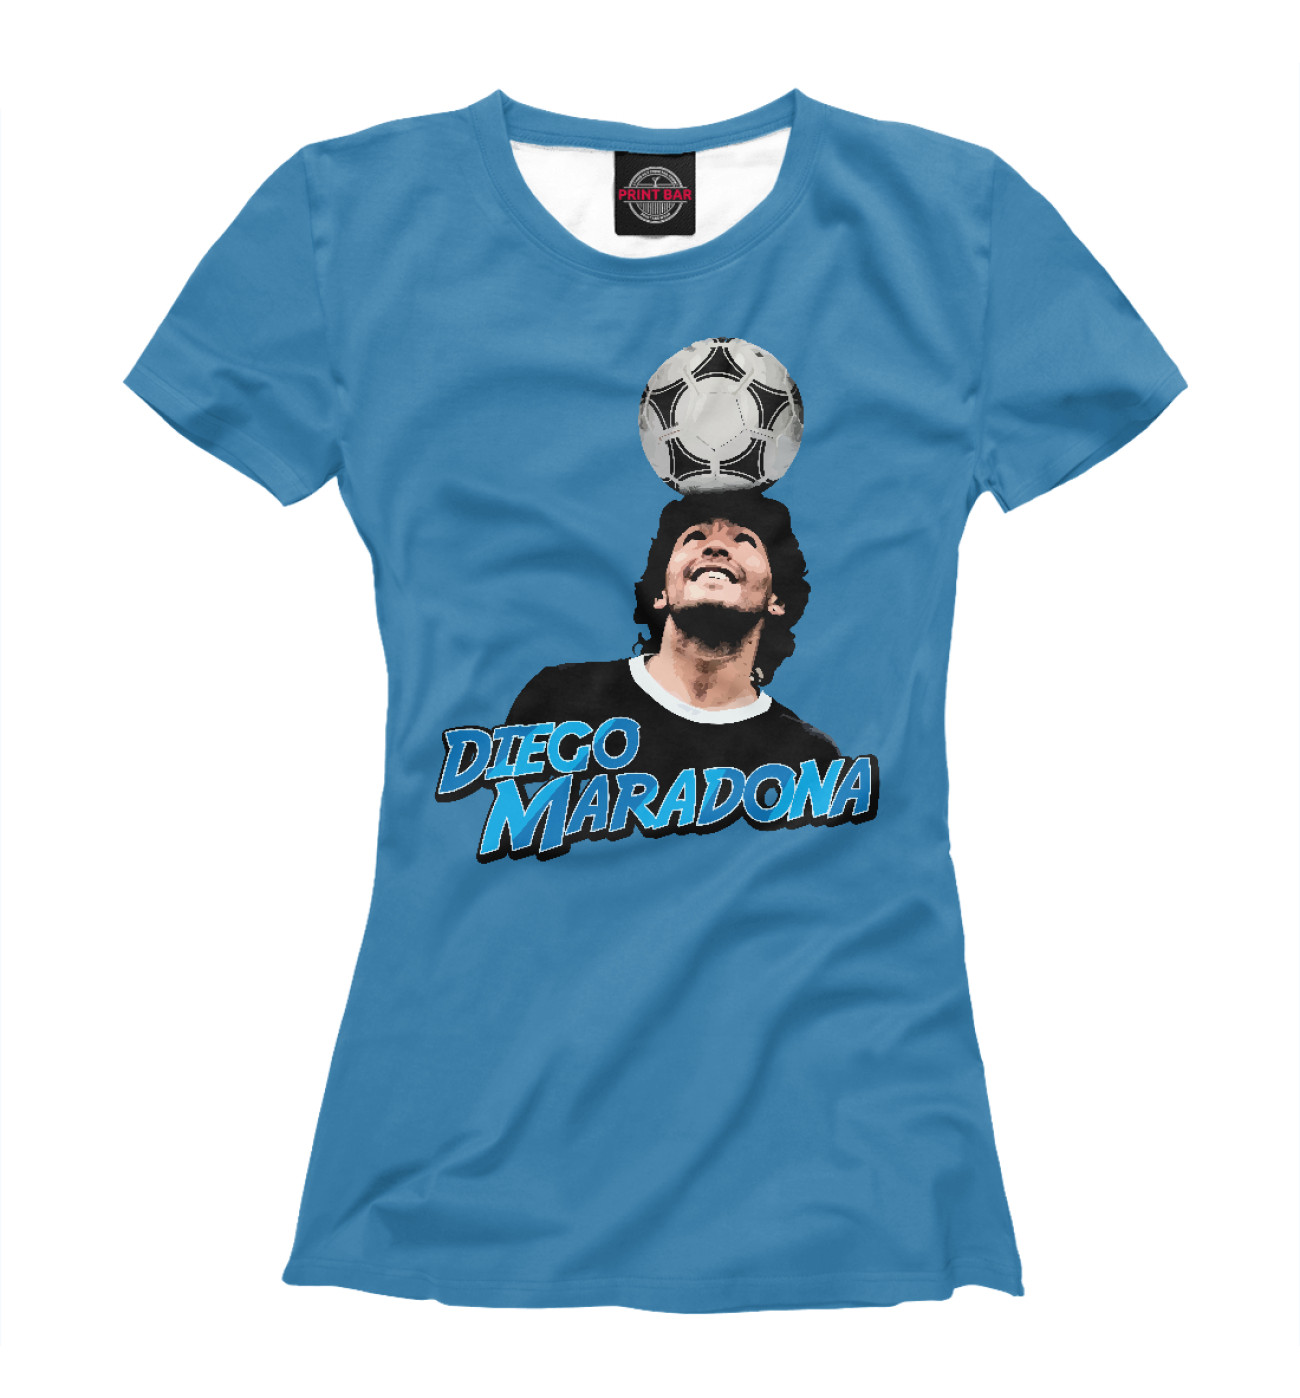 Женская Футболка Diego Maradona, артикул: FLT-667856-fut-1